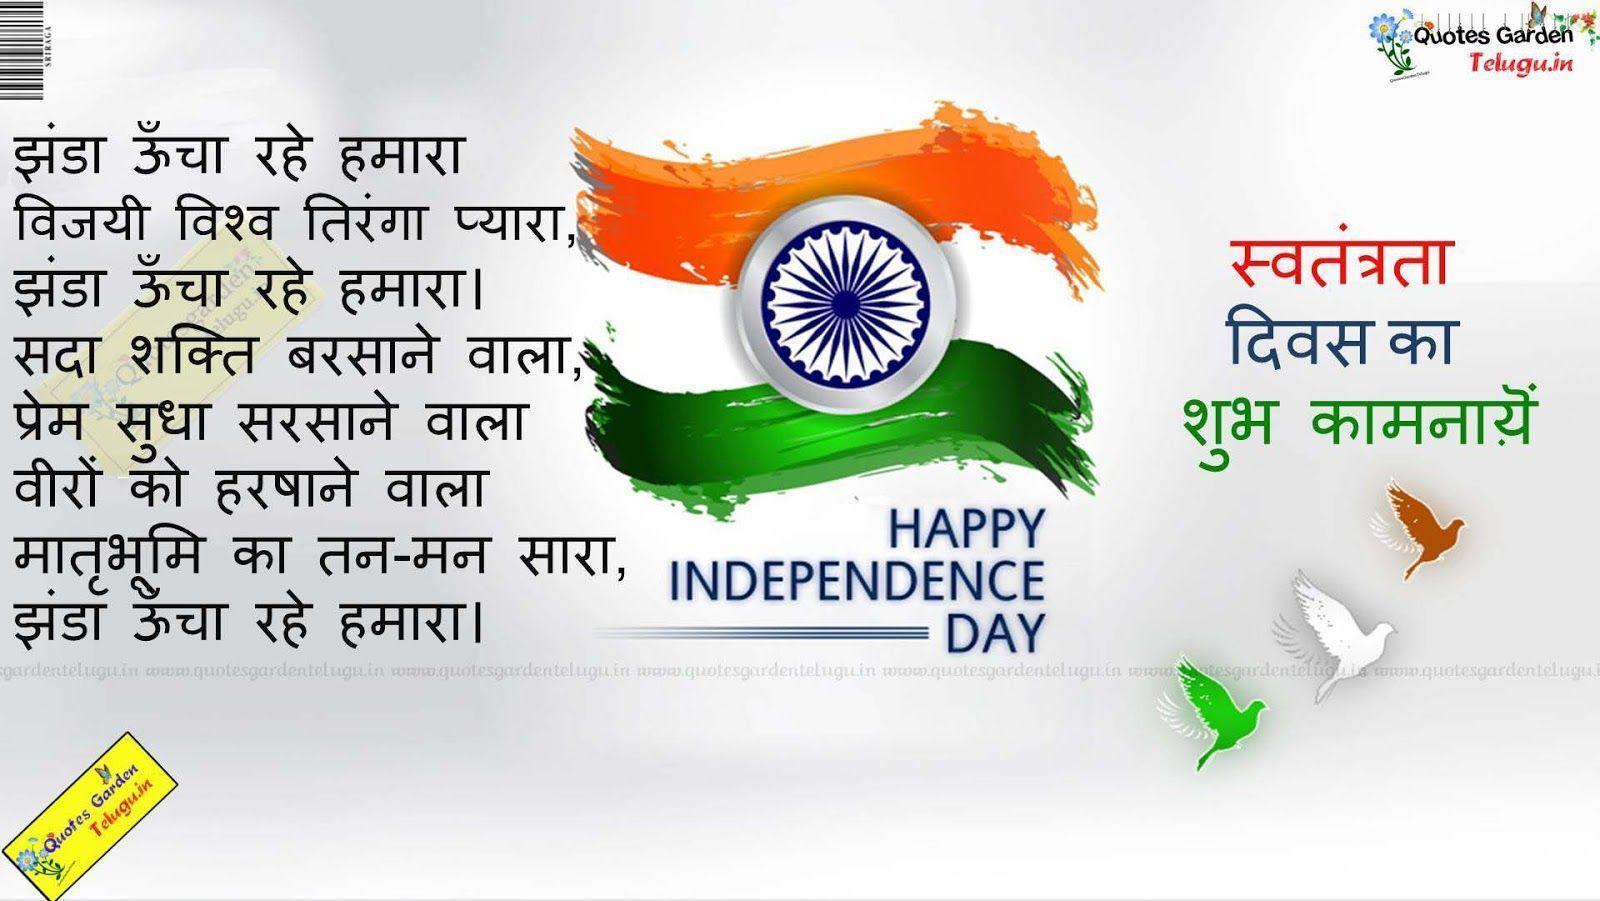 Independence day greetings quotes Desh bhakti shayari image